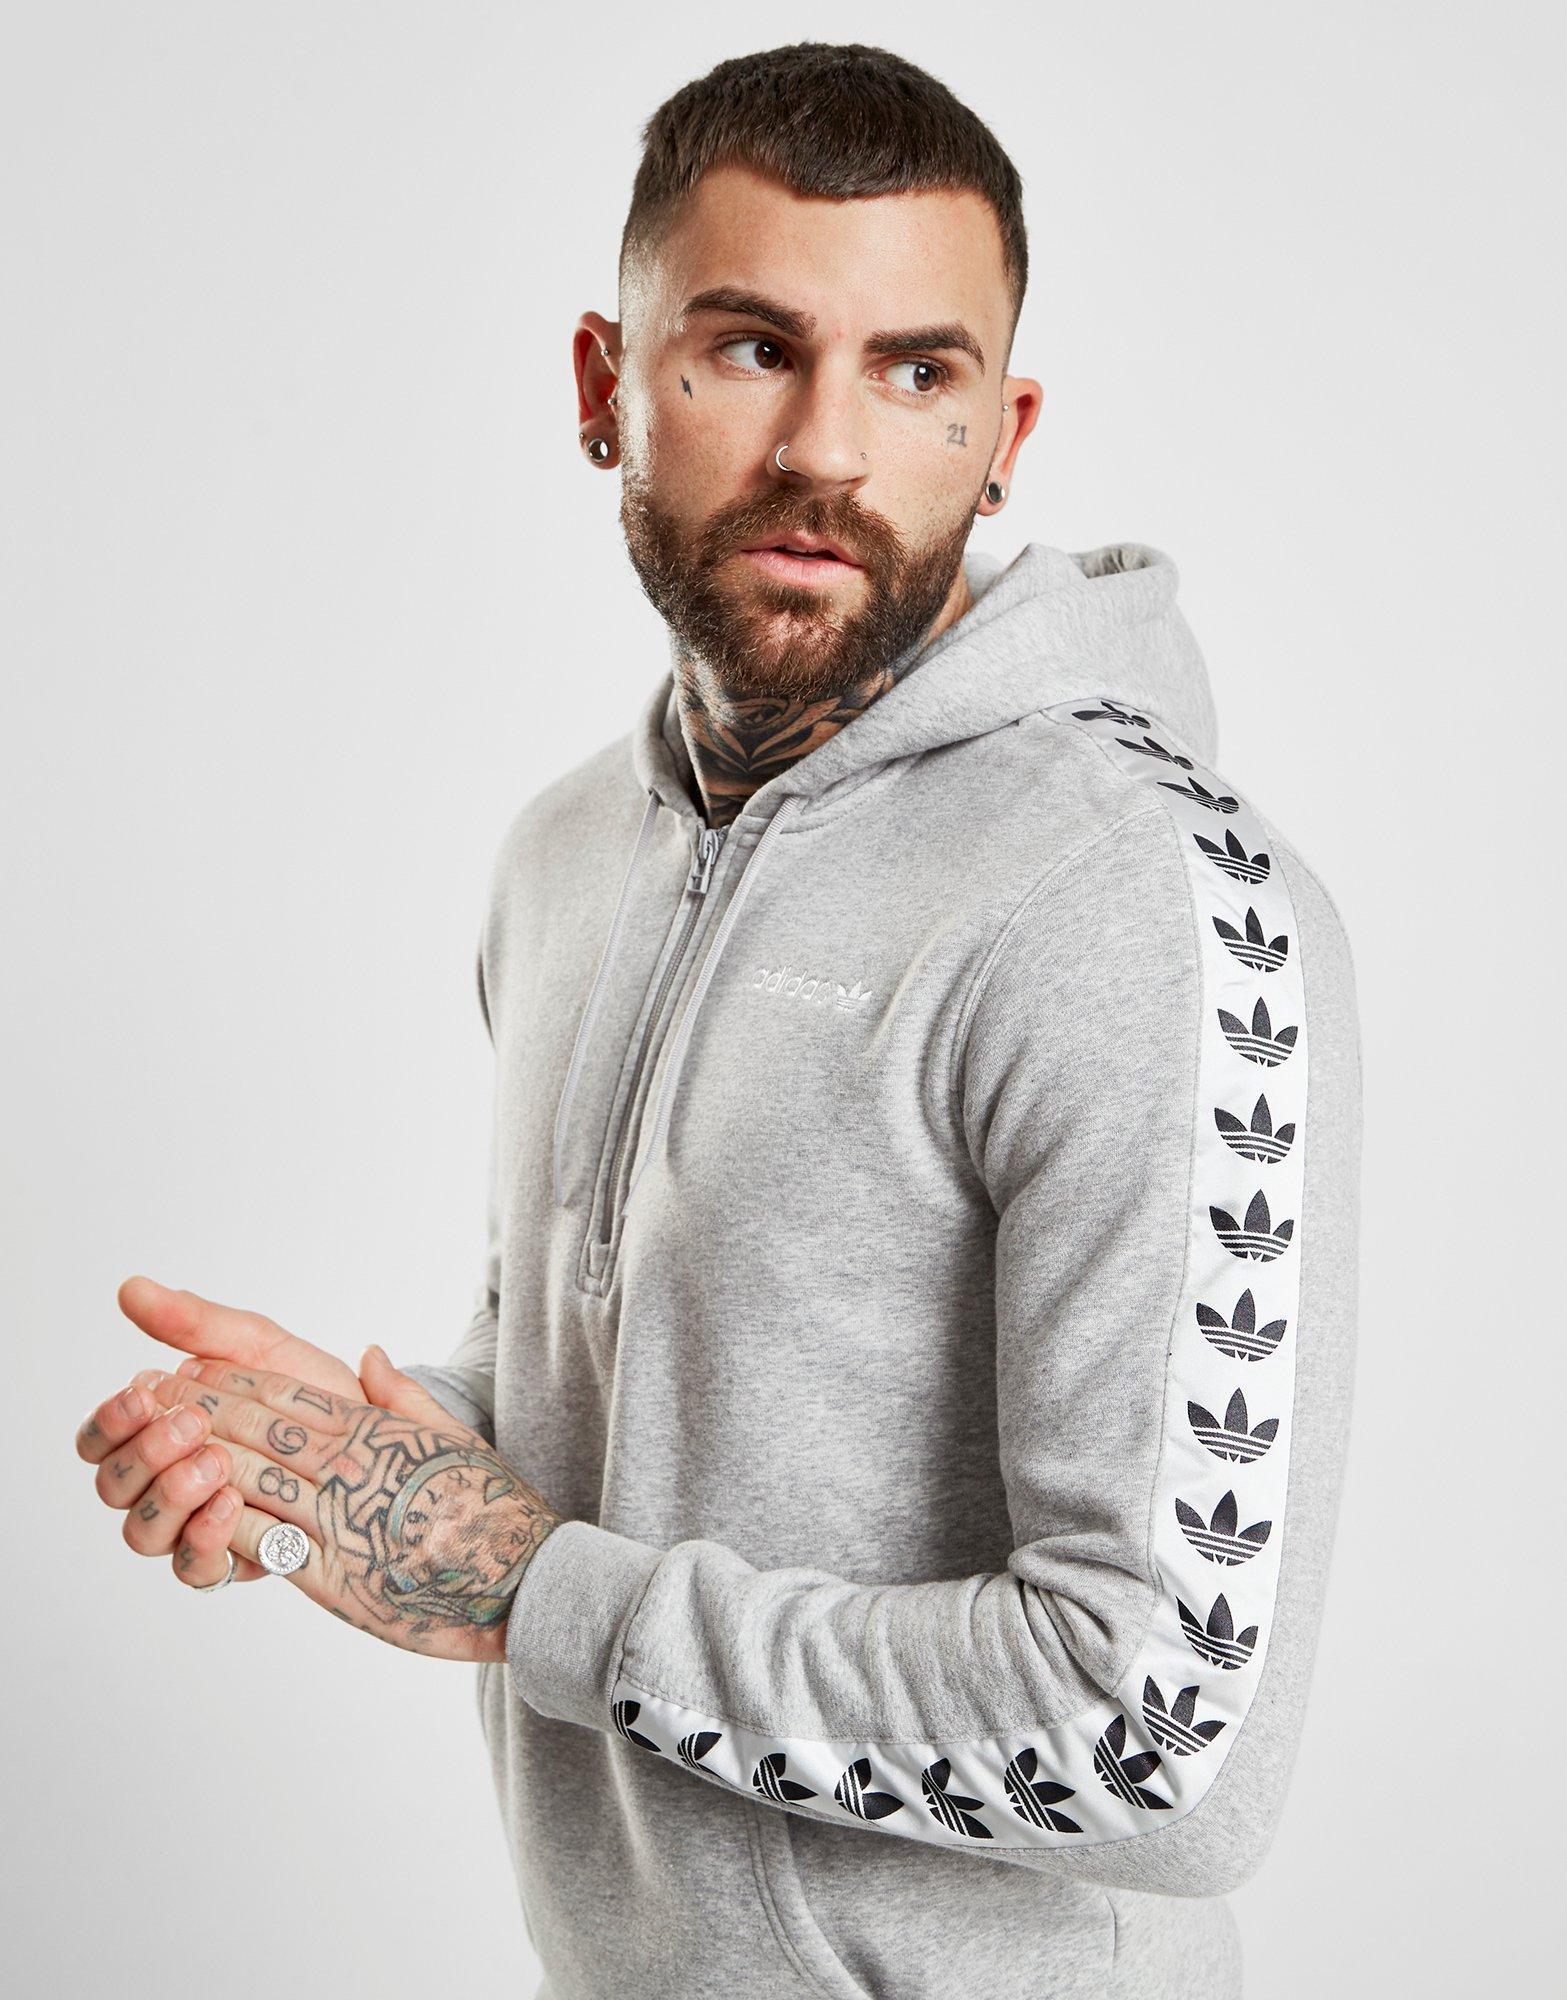 adidas tape hoodie grey,yasserchemicals.com